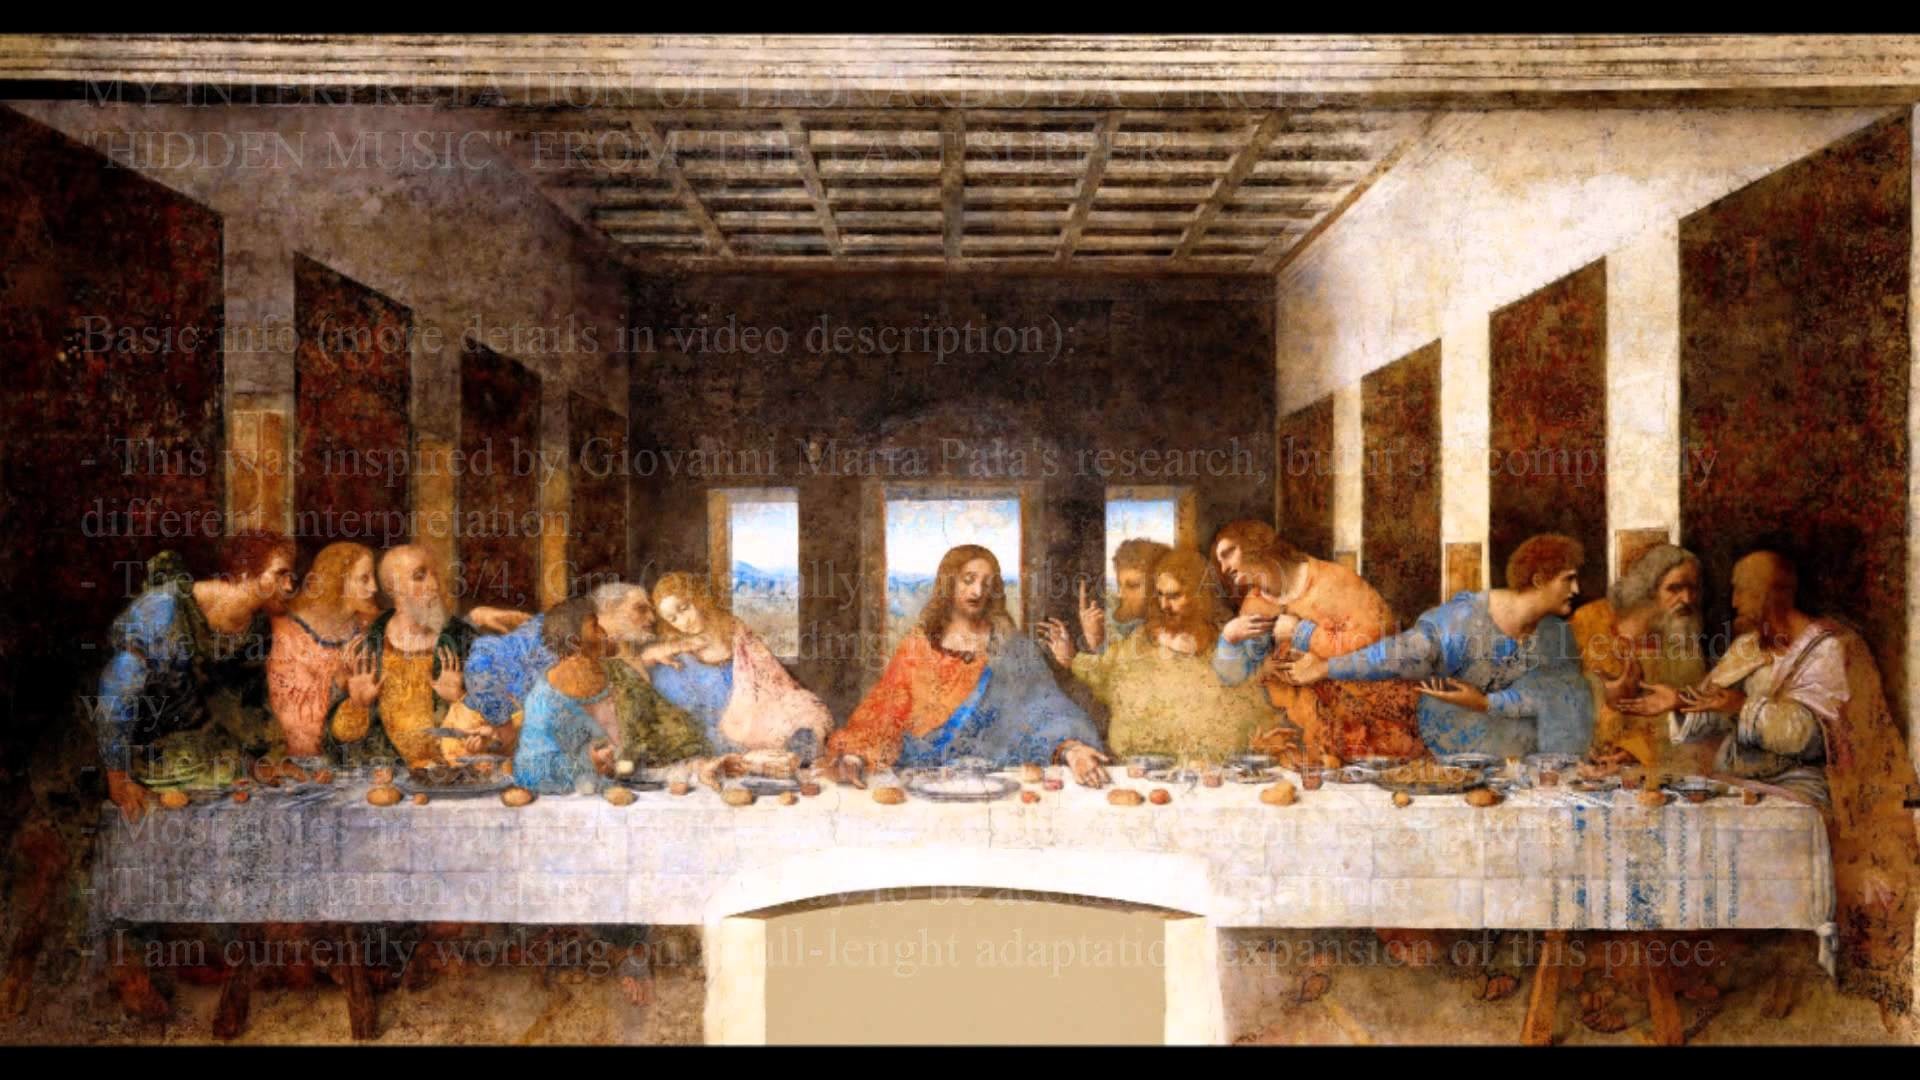 1920x1080 Leonardo Da Vinci's "Hidden Music" in The Last Supper (Mousanz  Interpretation)